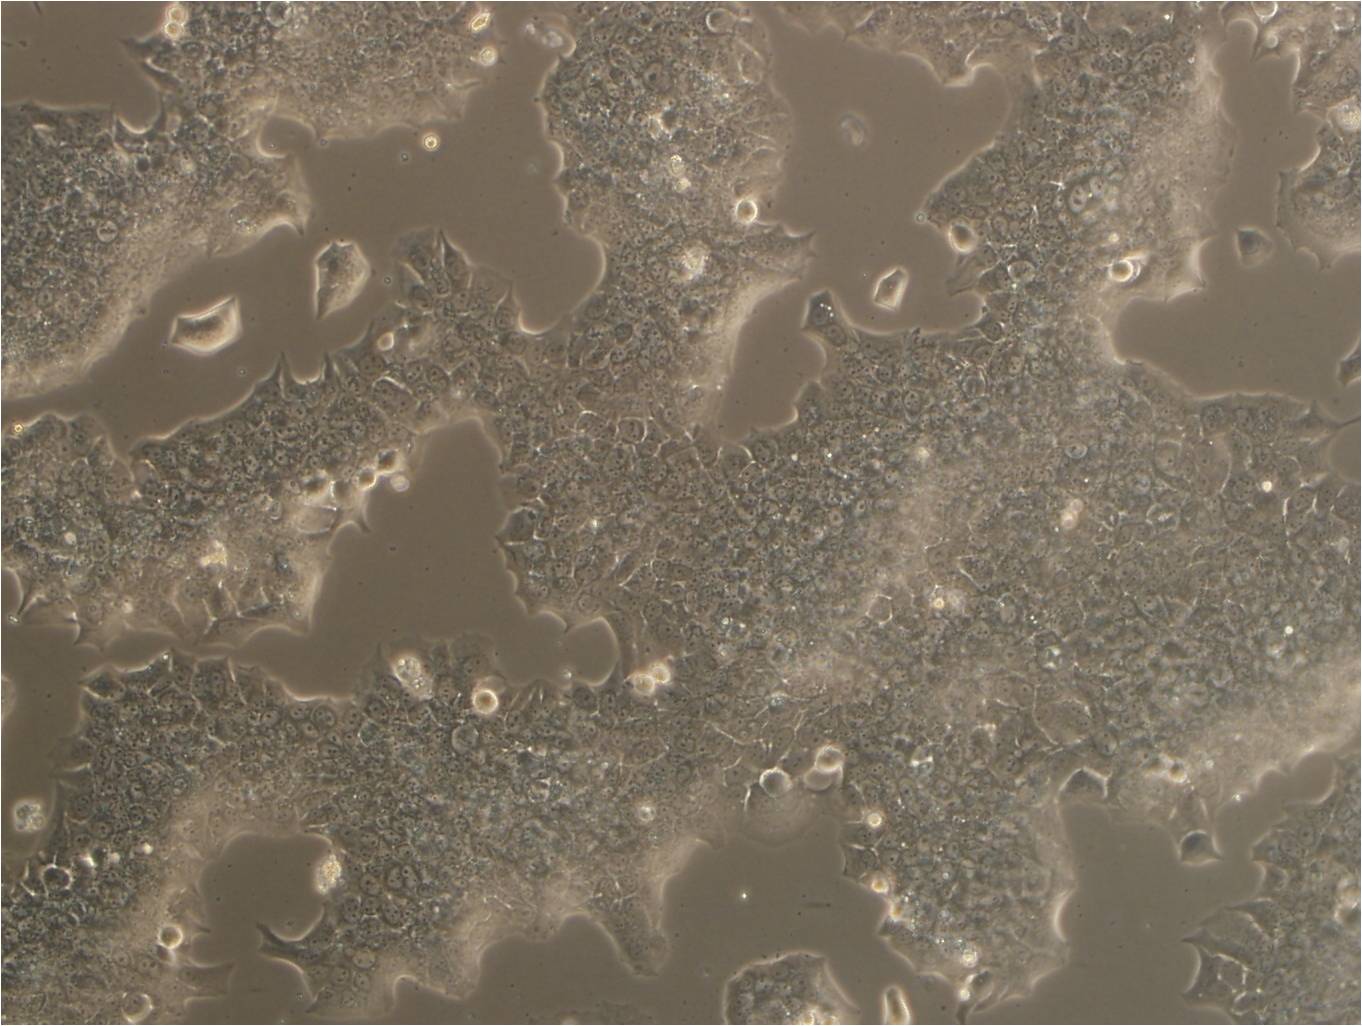 WSU-HN13 cell line人口腔鳞状细胞癌细胞系,WSU-HN13 cell line